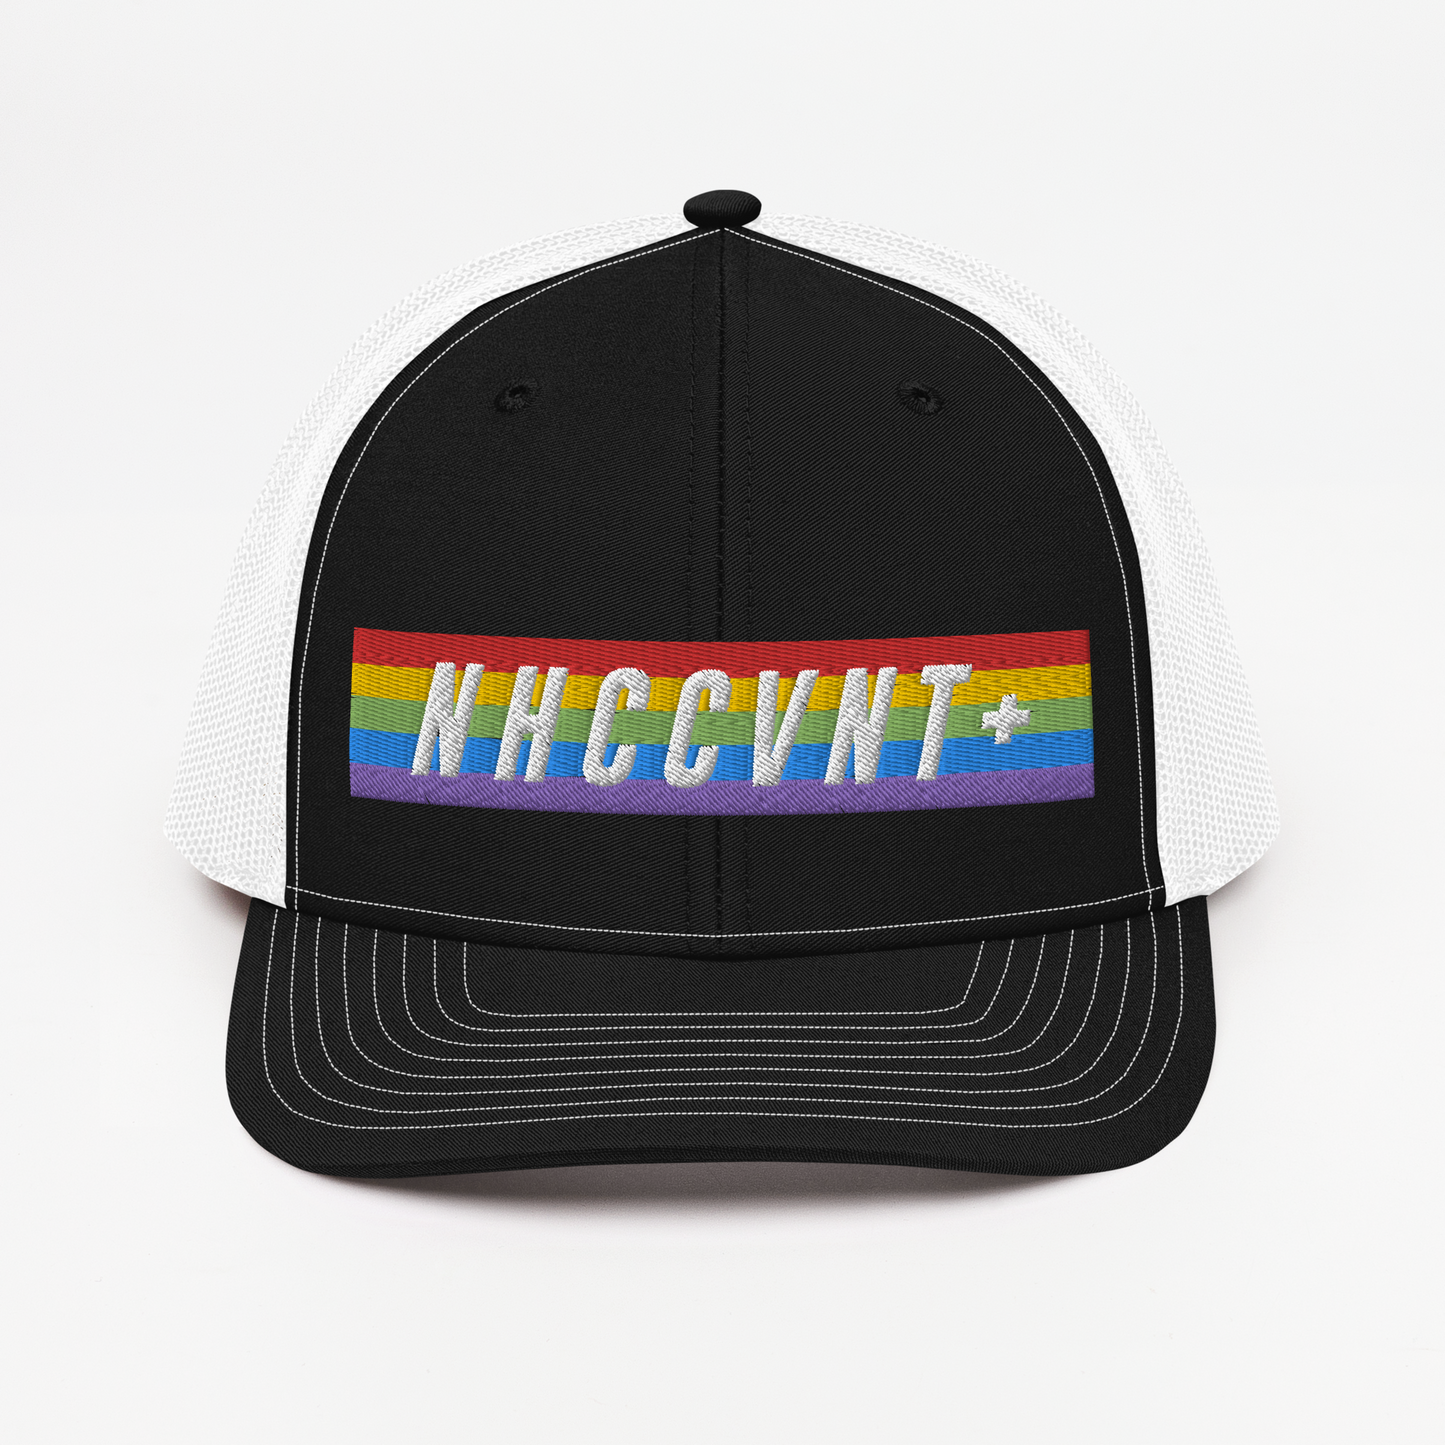 NHCCVNT+ Richardson Trucker Hat